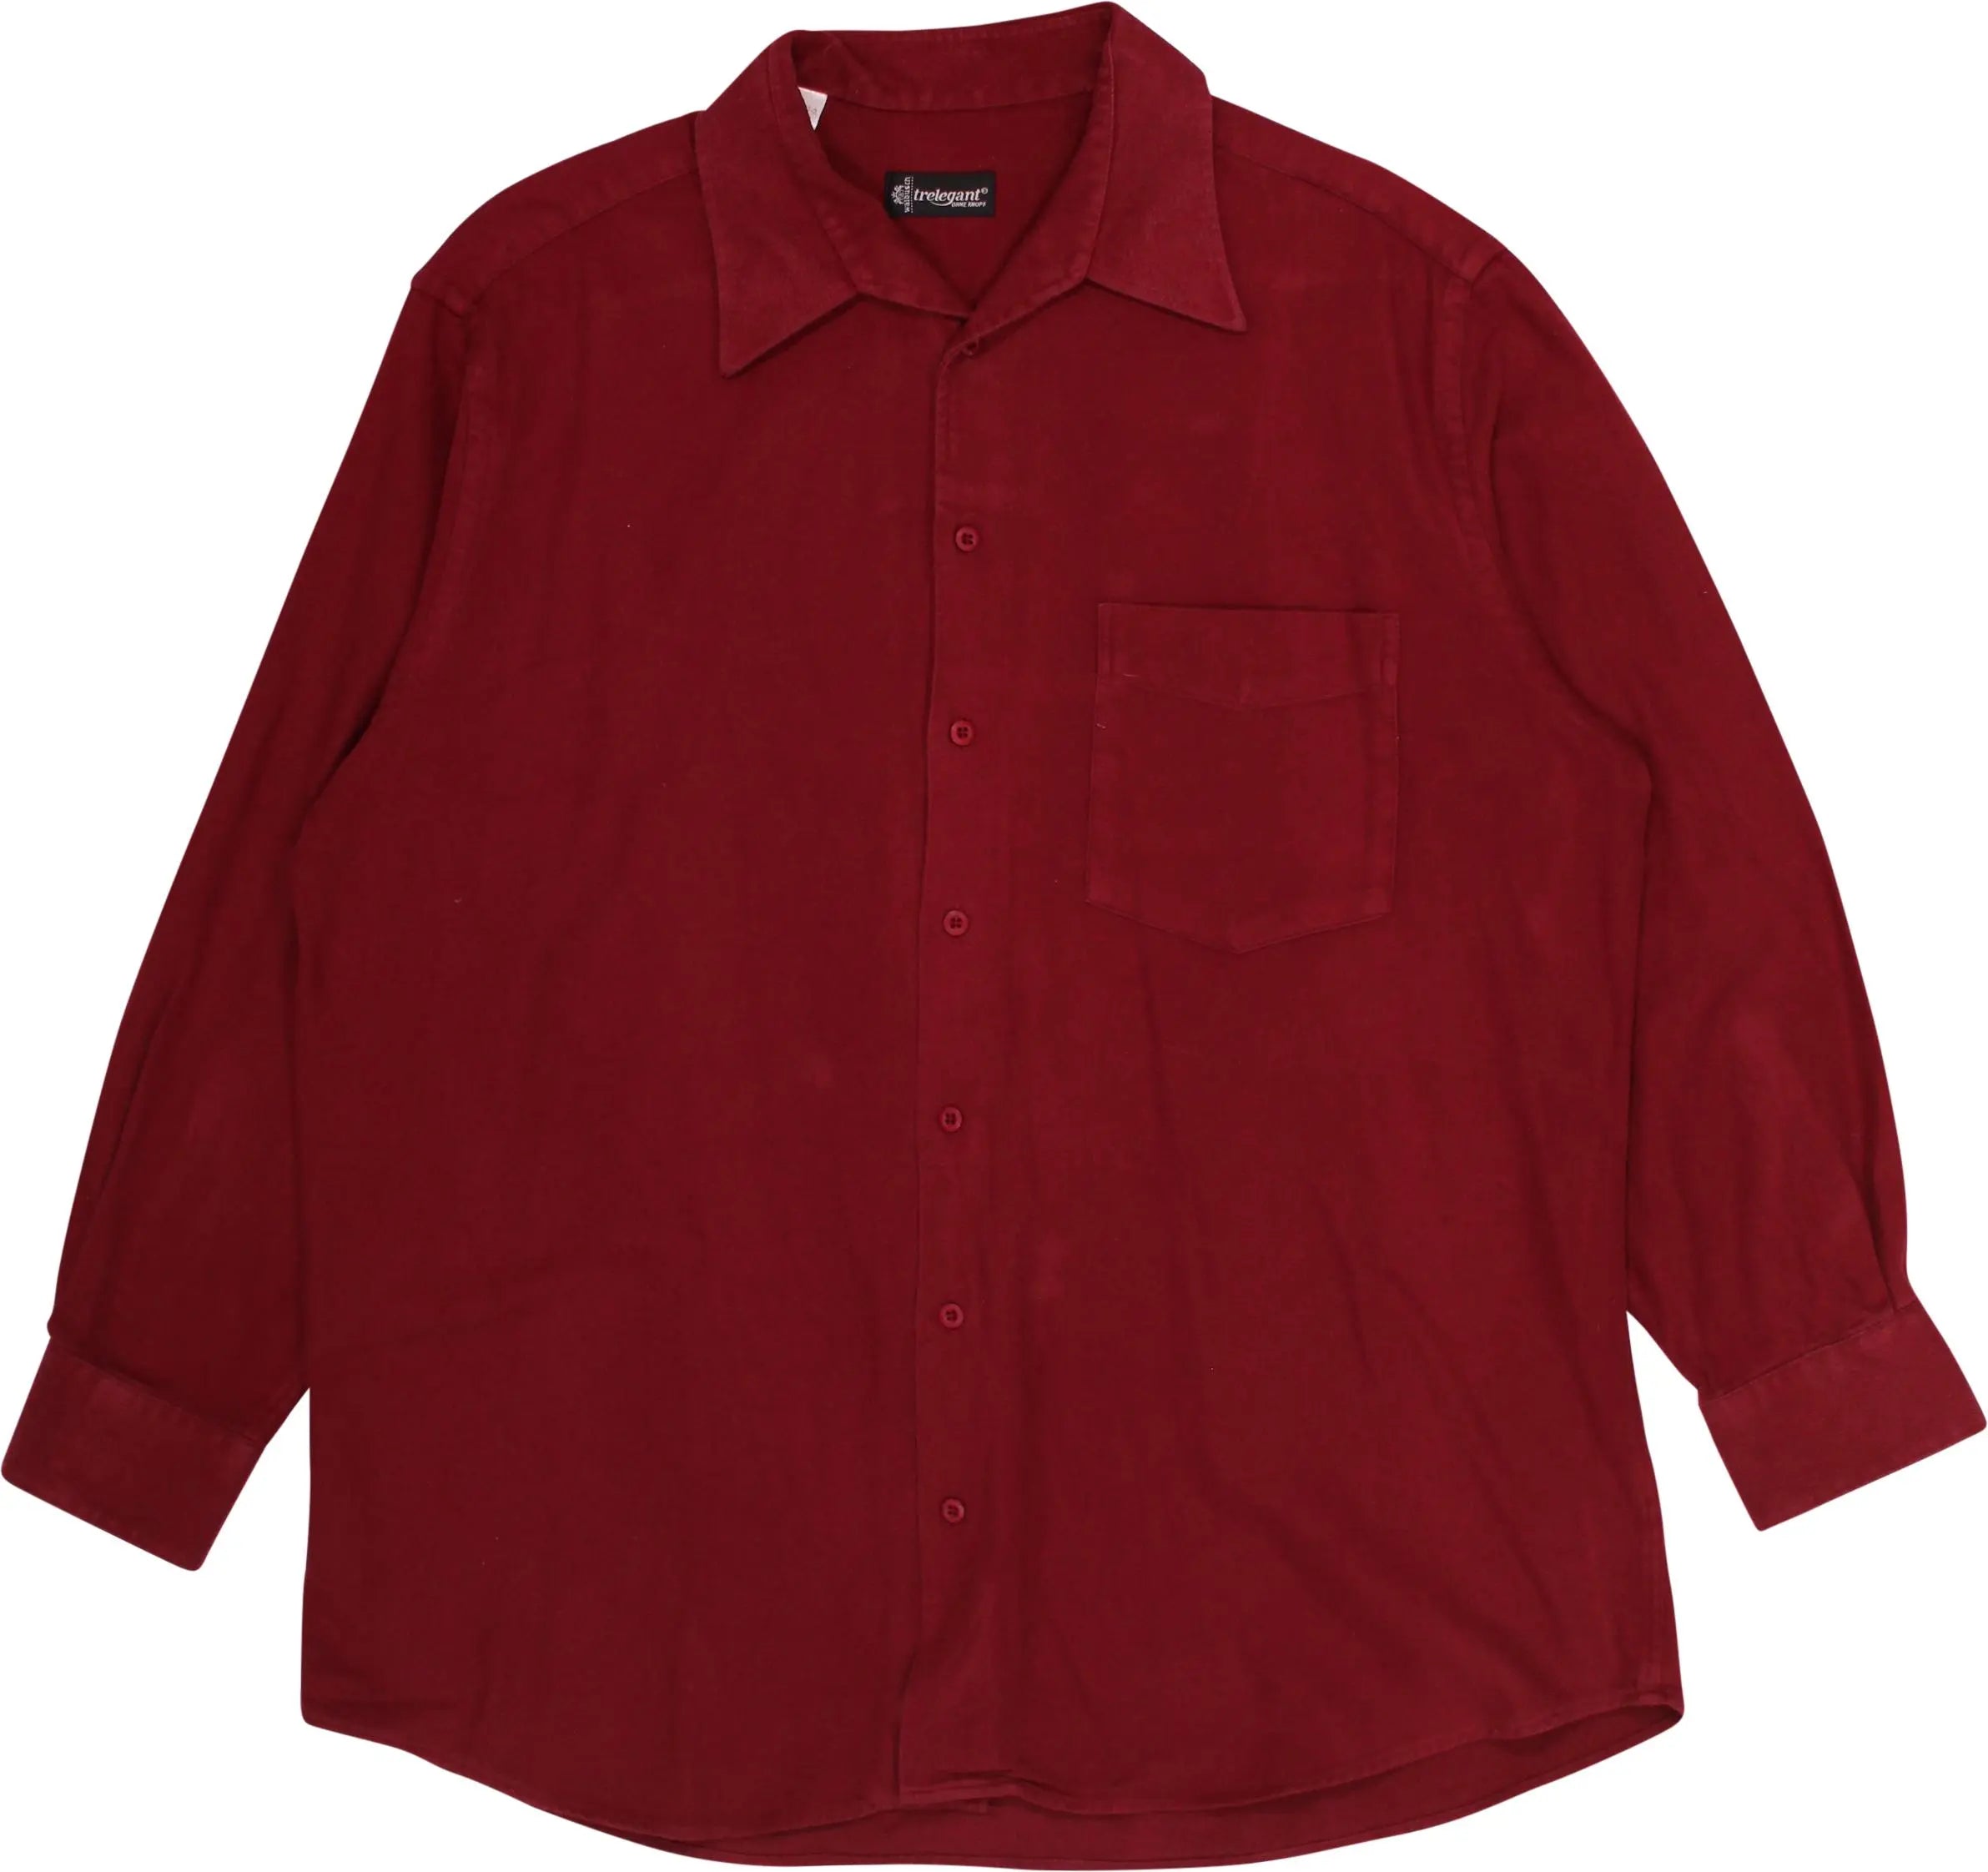 Walbusch Trelegant - Flannel Shirt- ThriftTale.com - Vintage and second handclothing